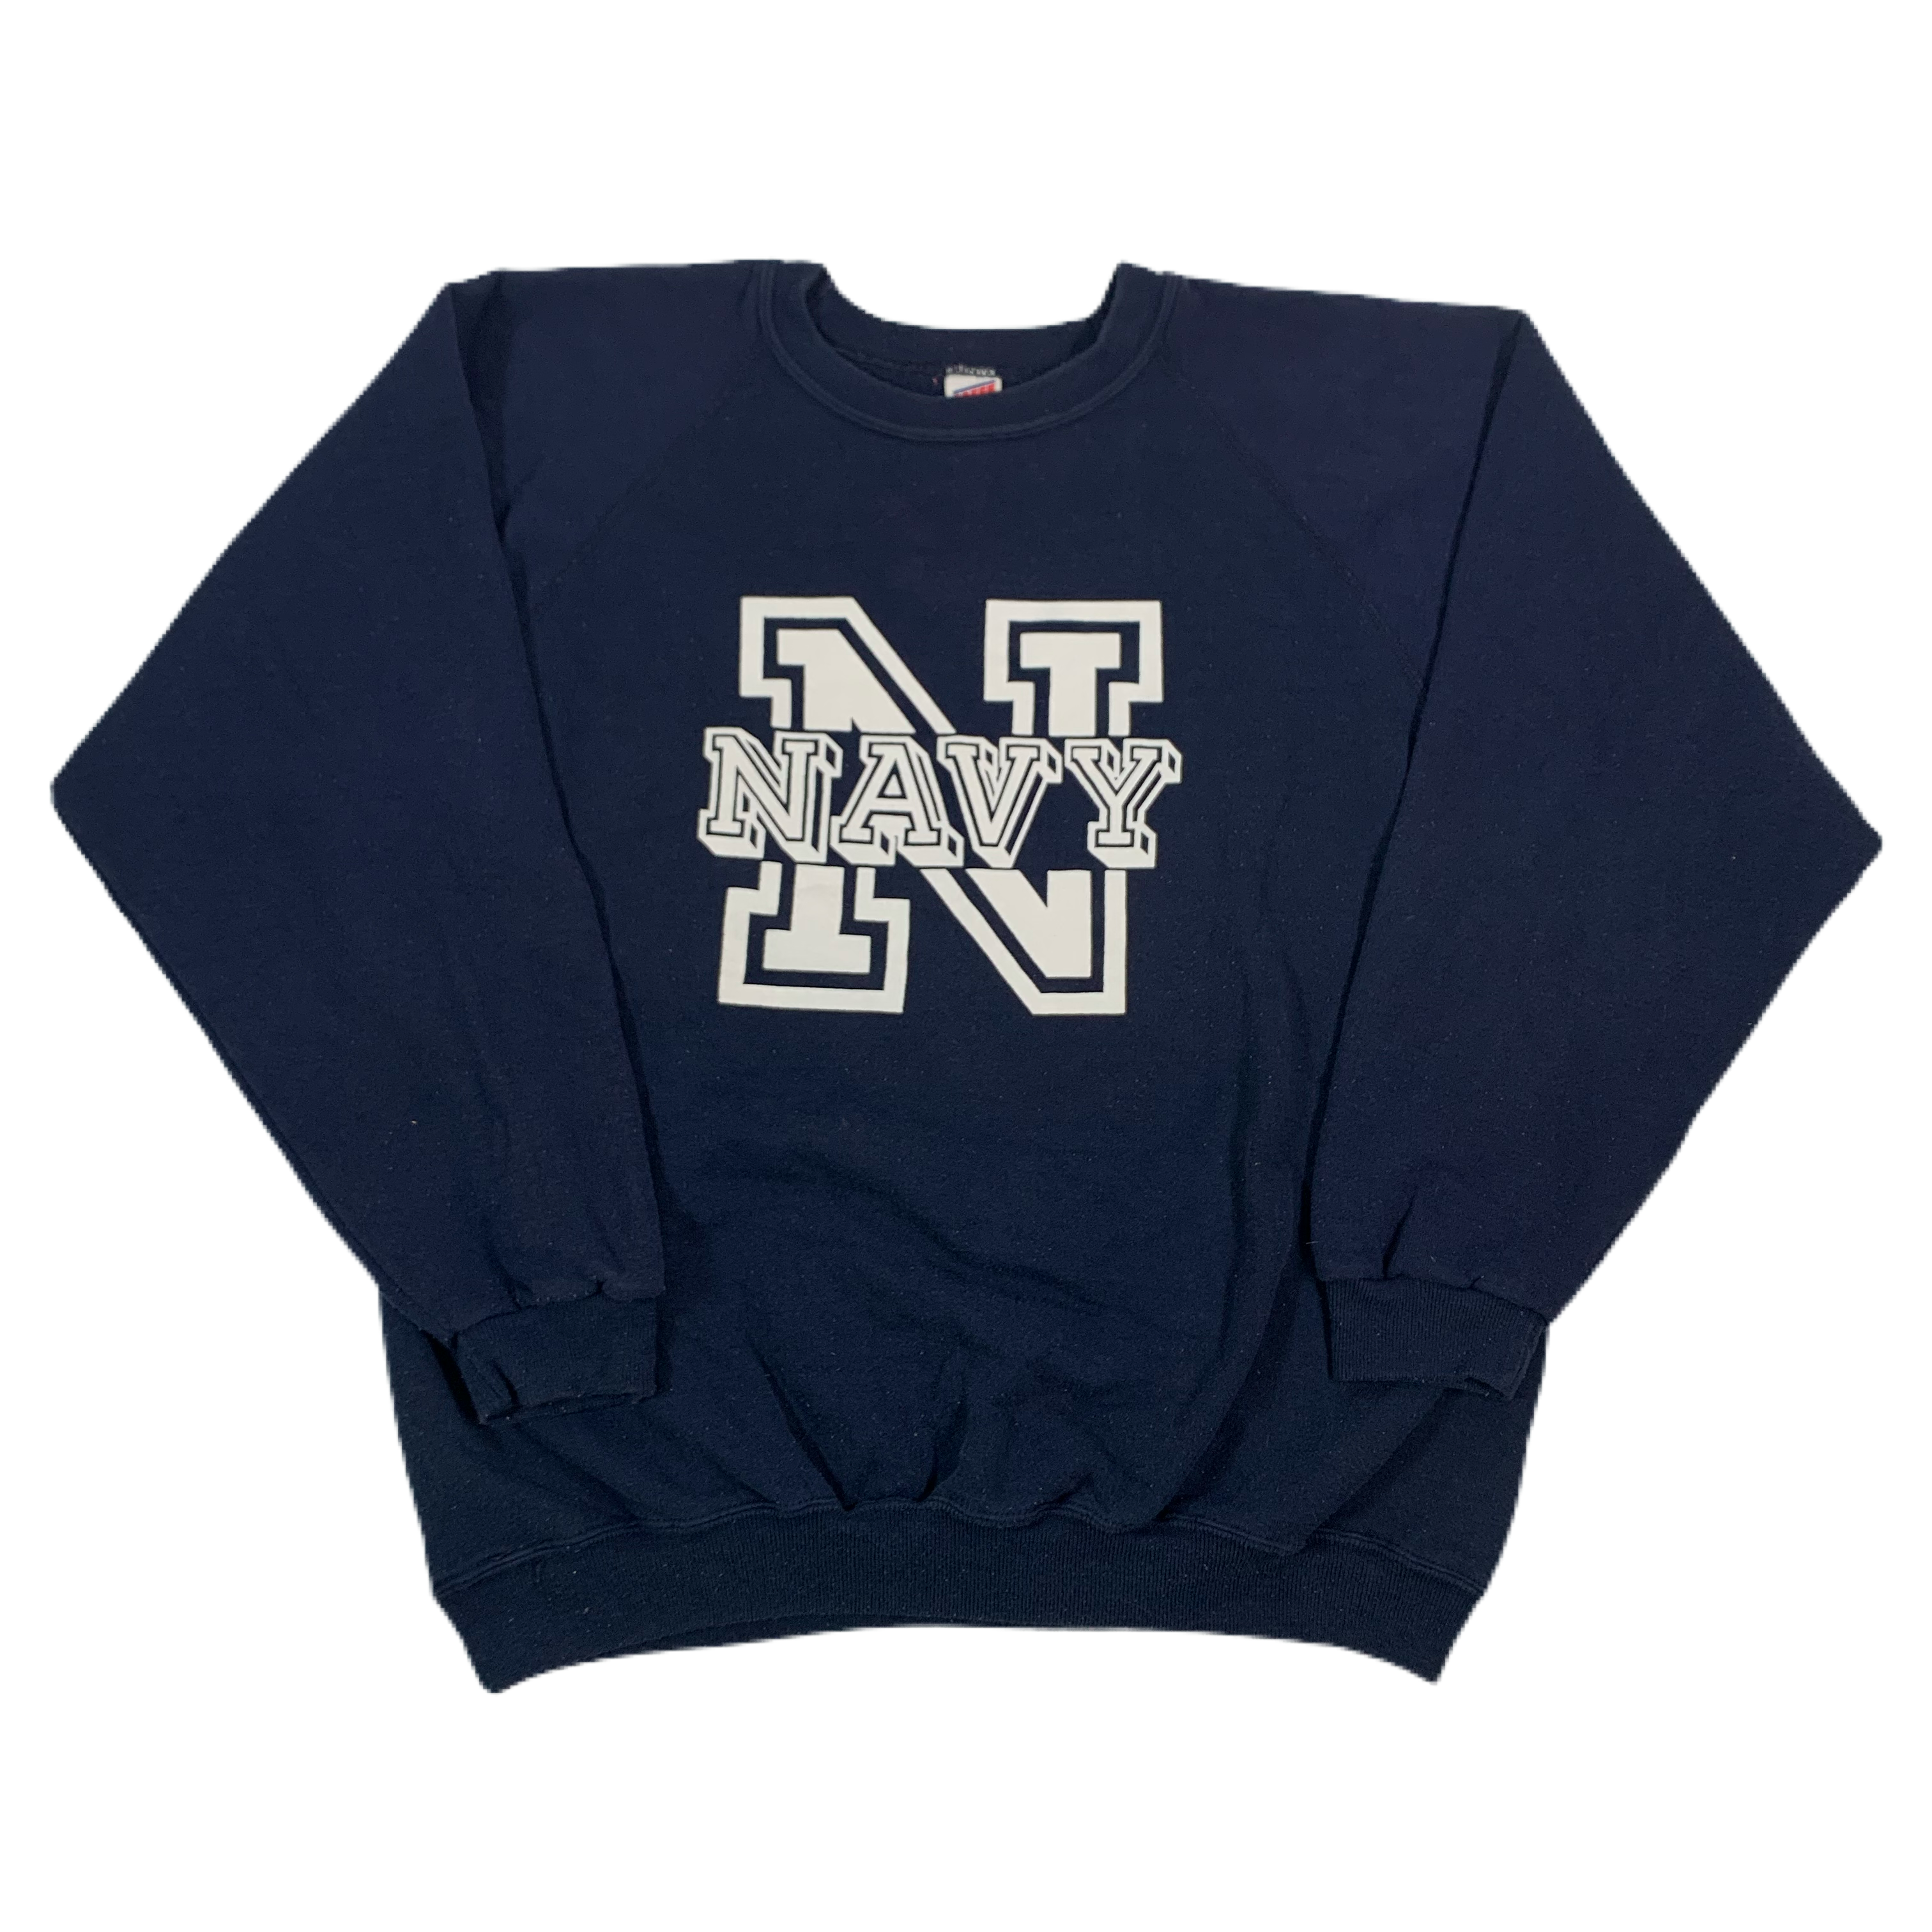 united states navy sweatshirt